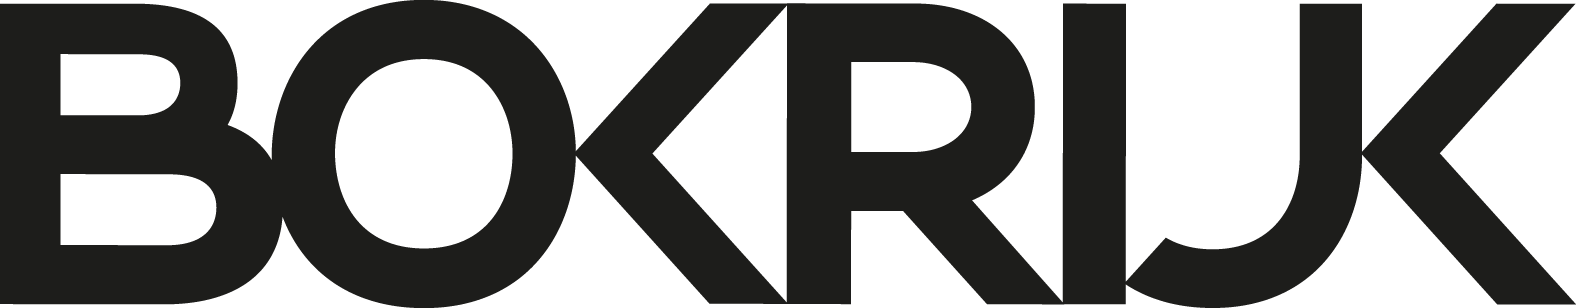 bokrijk_logo.png